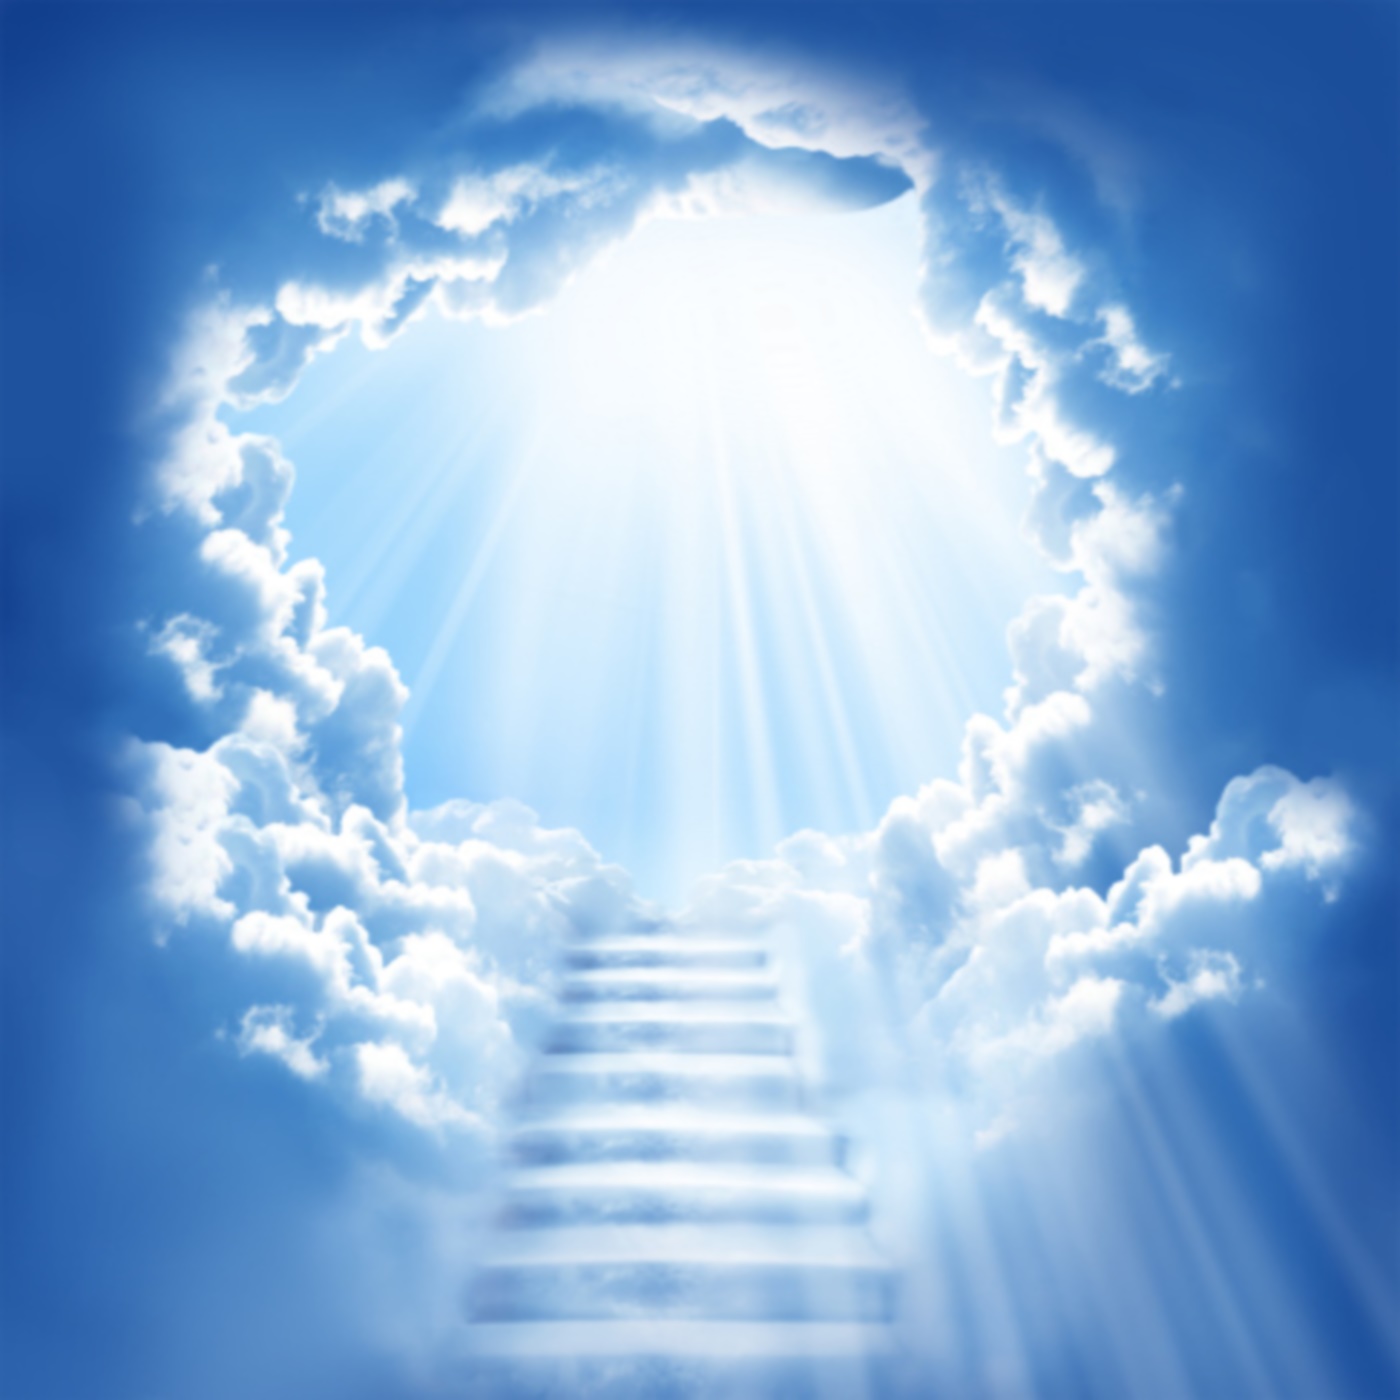 A Divine Revelation of Heaven